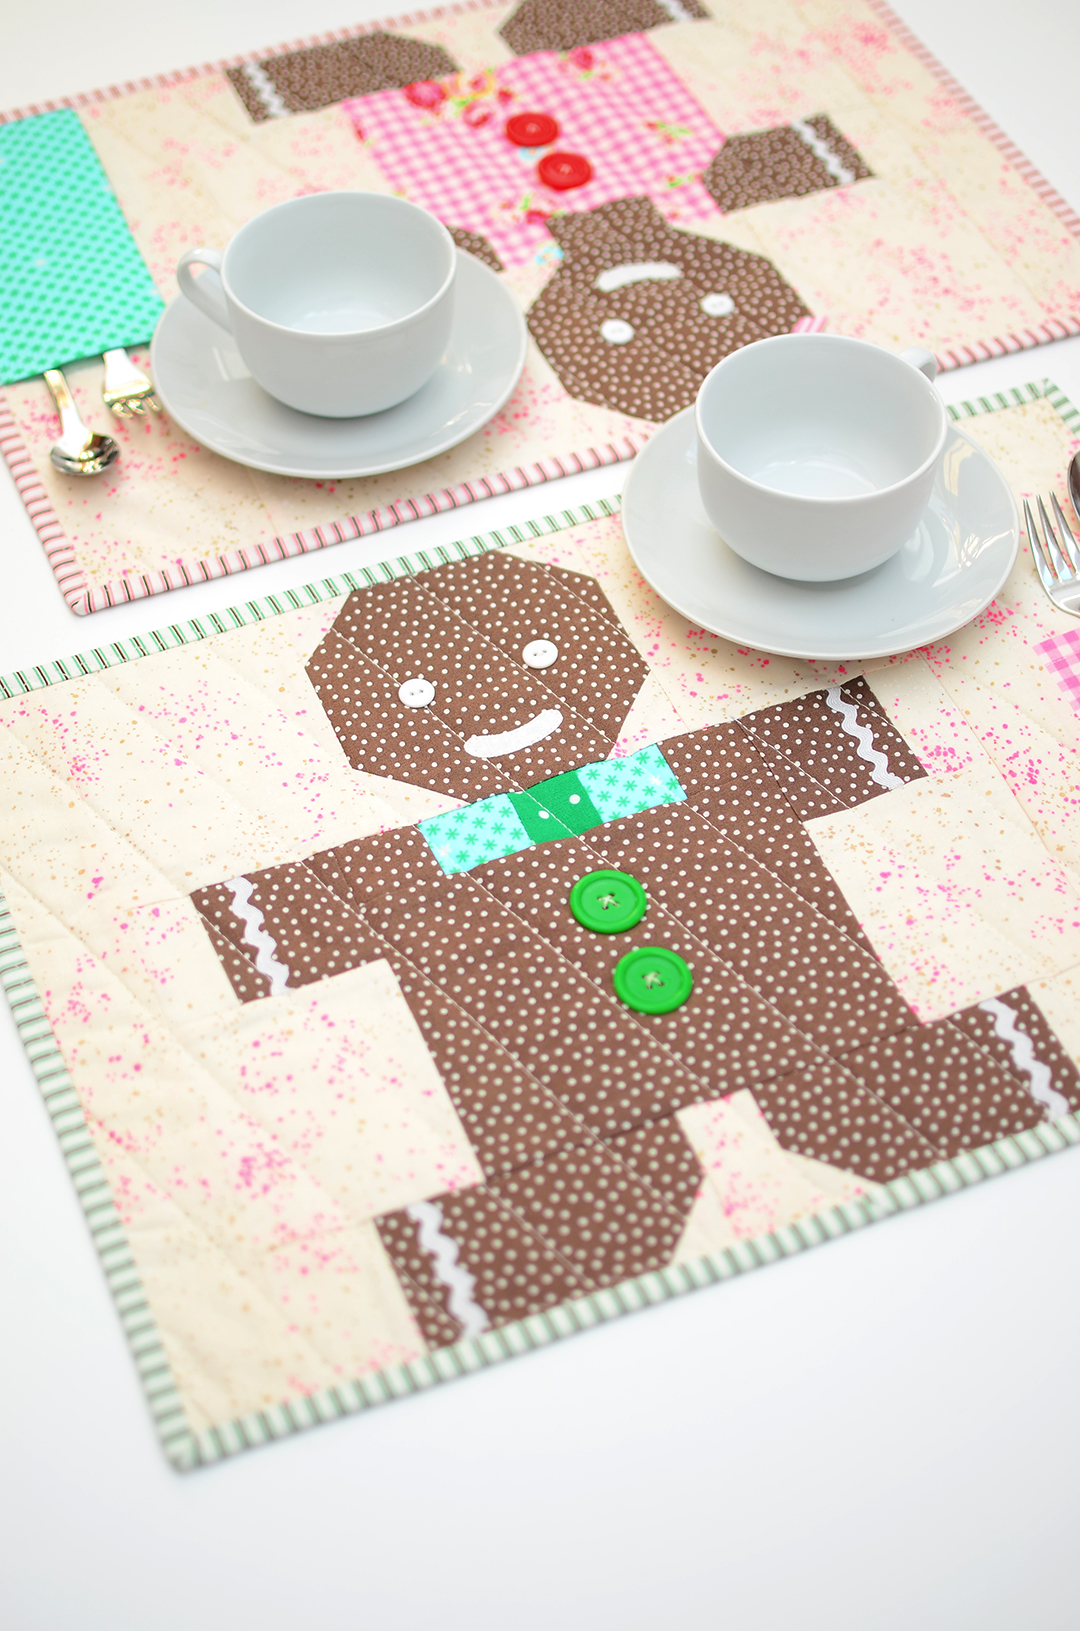 Gingerbread Man placemat quilt pattern - Christmas quilt patterns